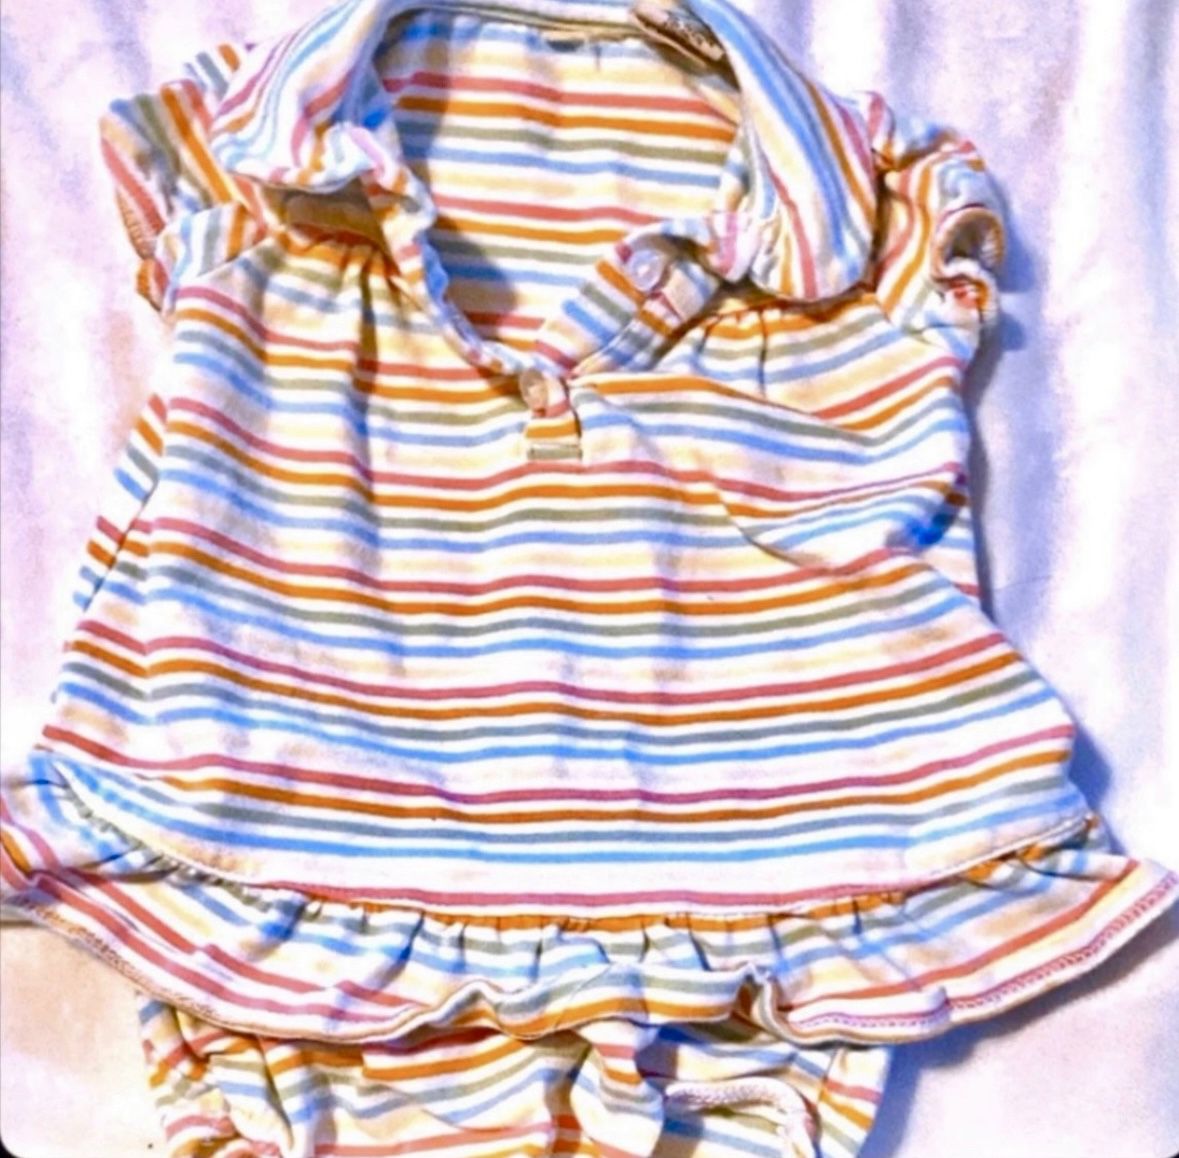 Infant & Baby Girls Size 0-3 Months 2-Piece Striped Rainbow Dress Set